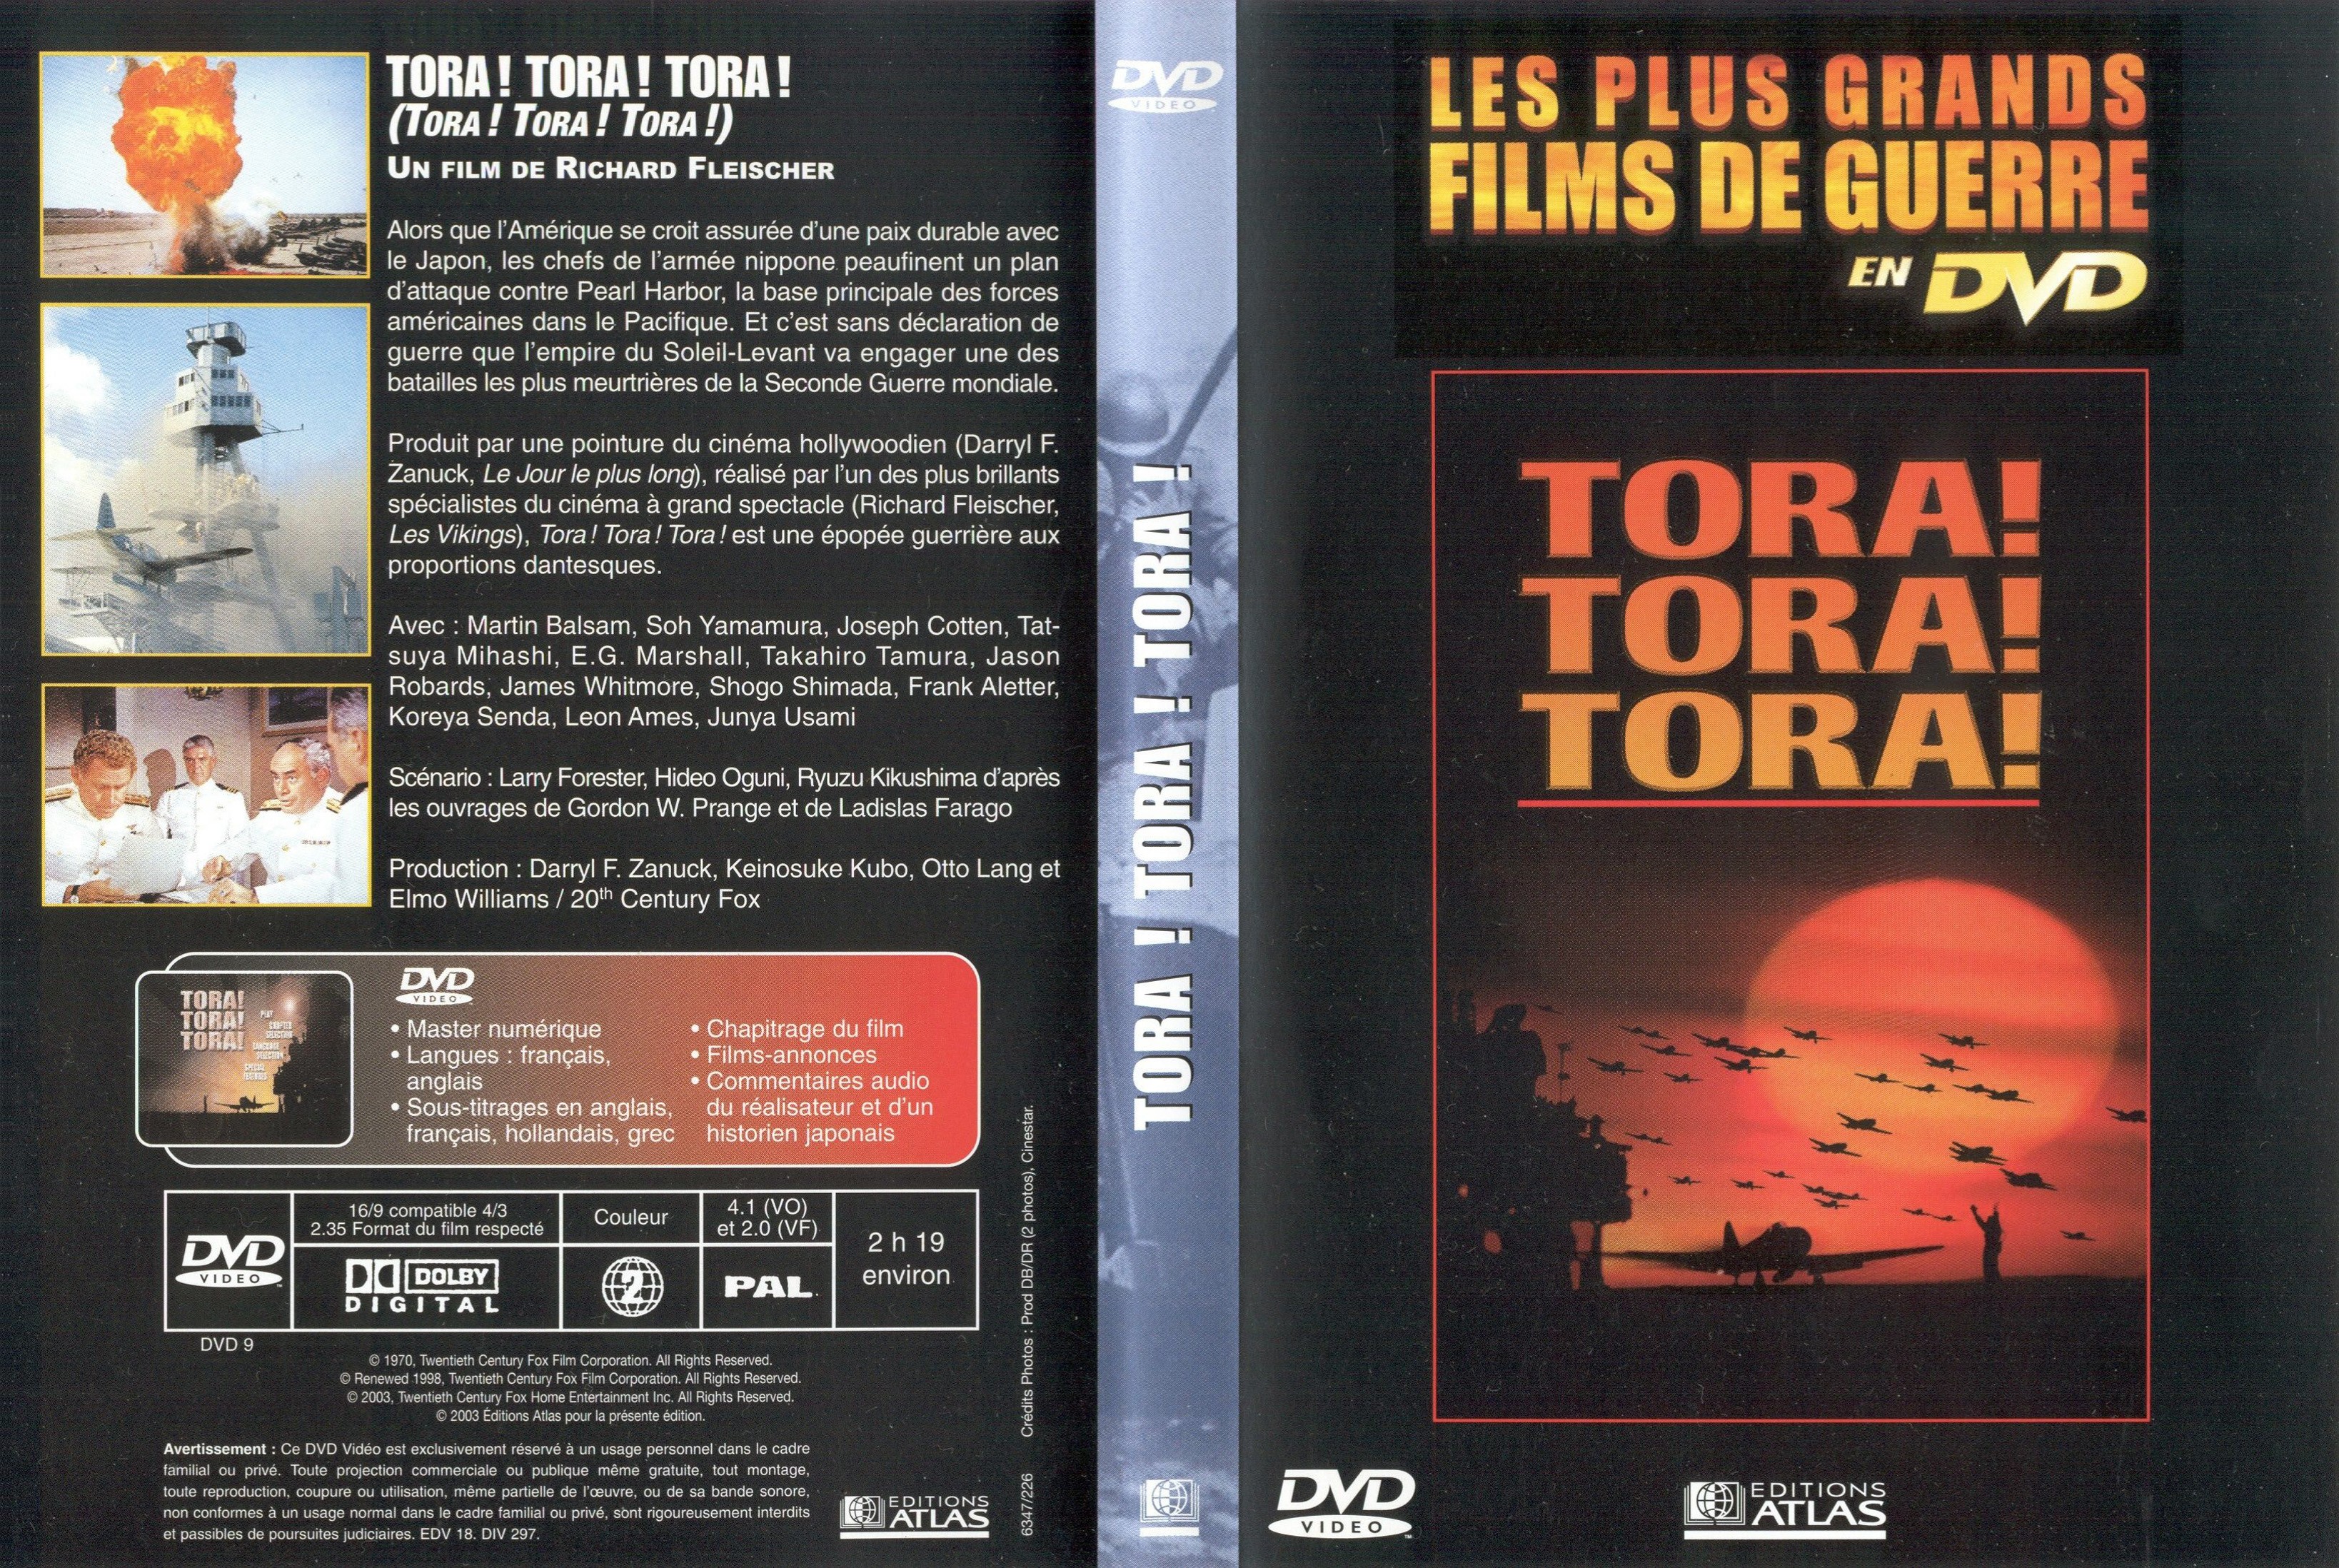 Jaquette DVD Tora Tora Tora v2